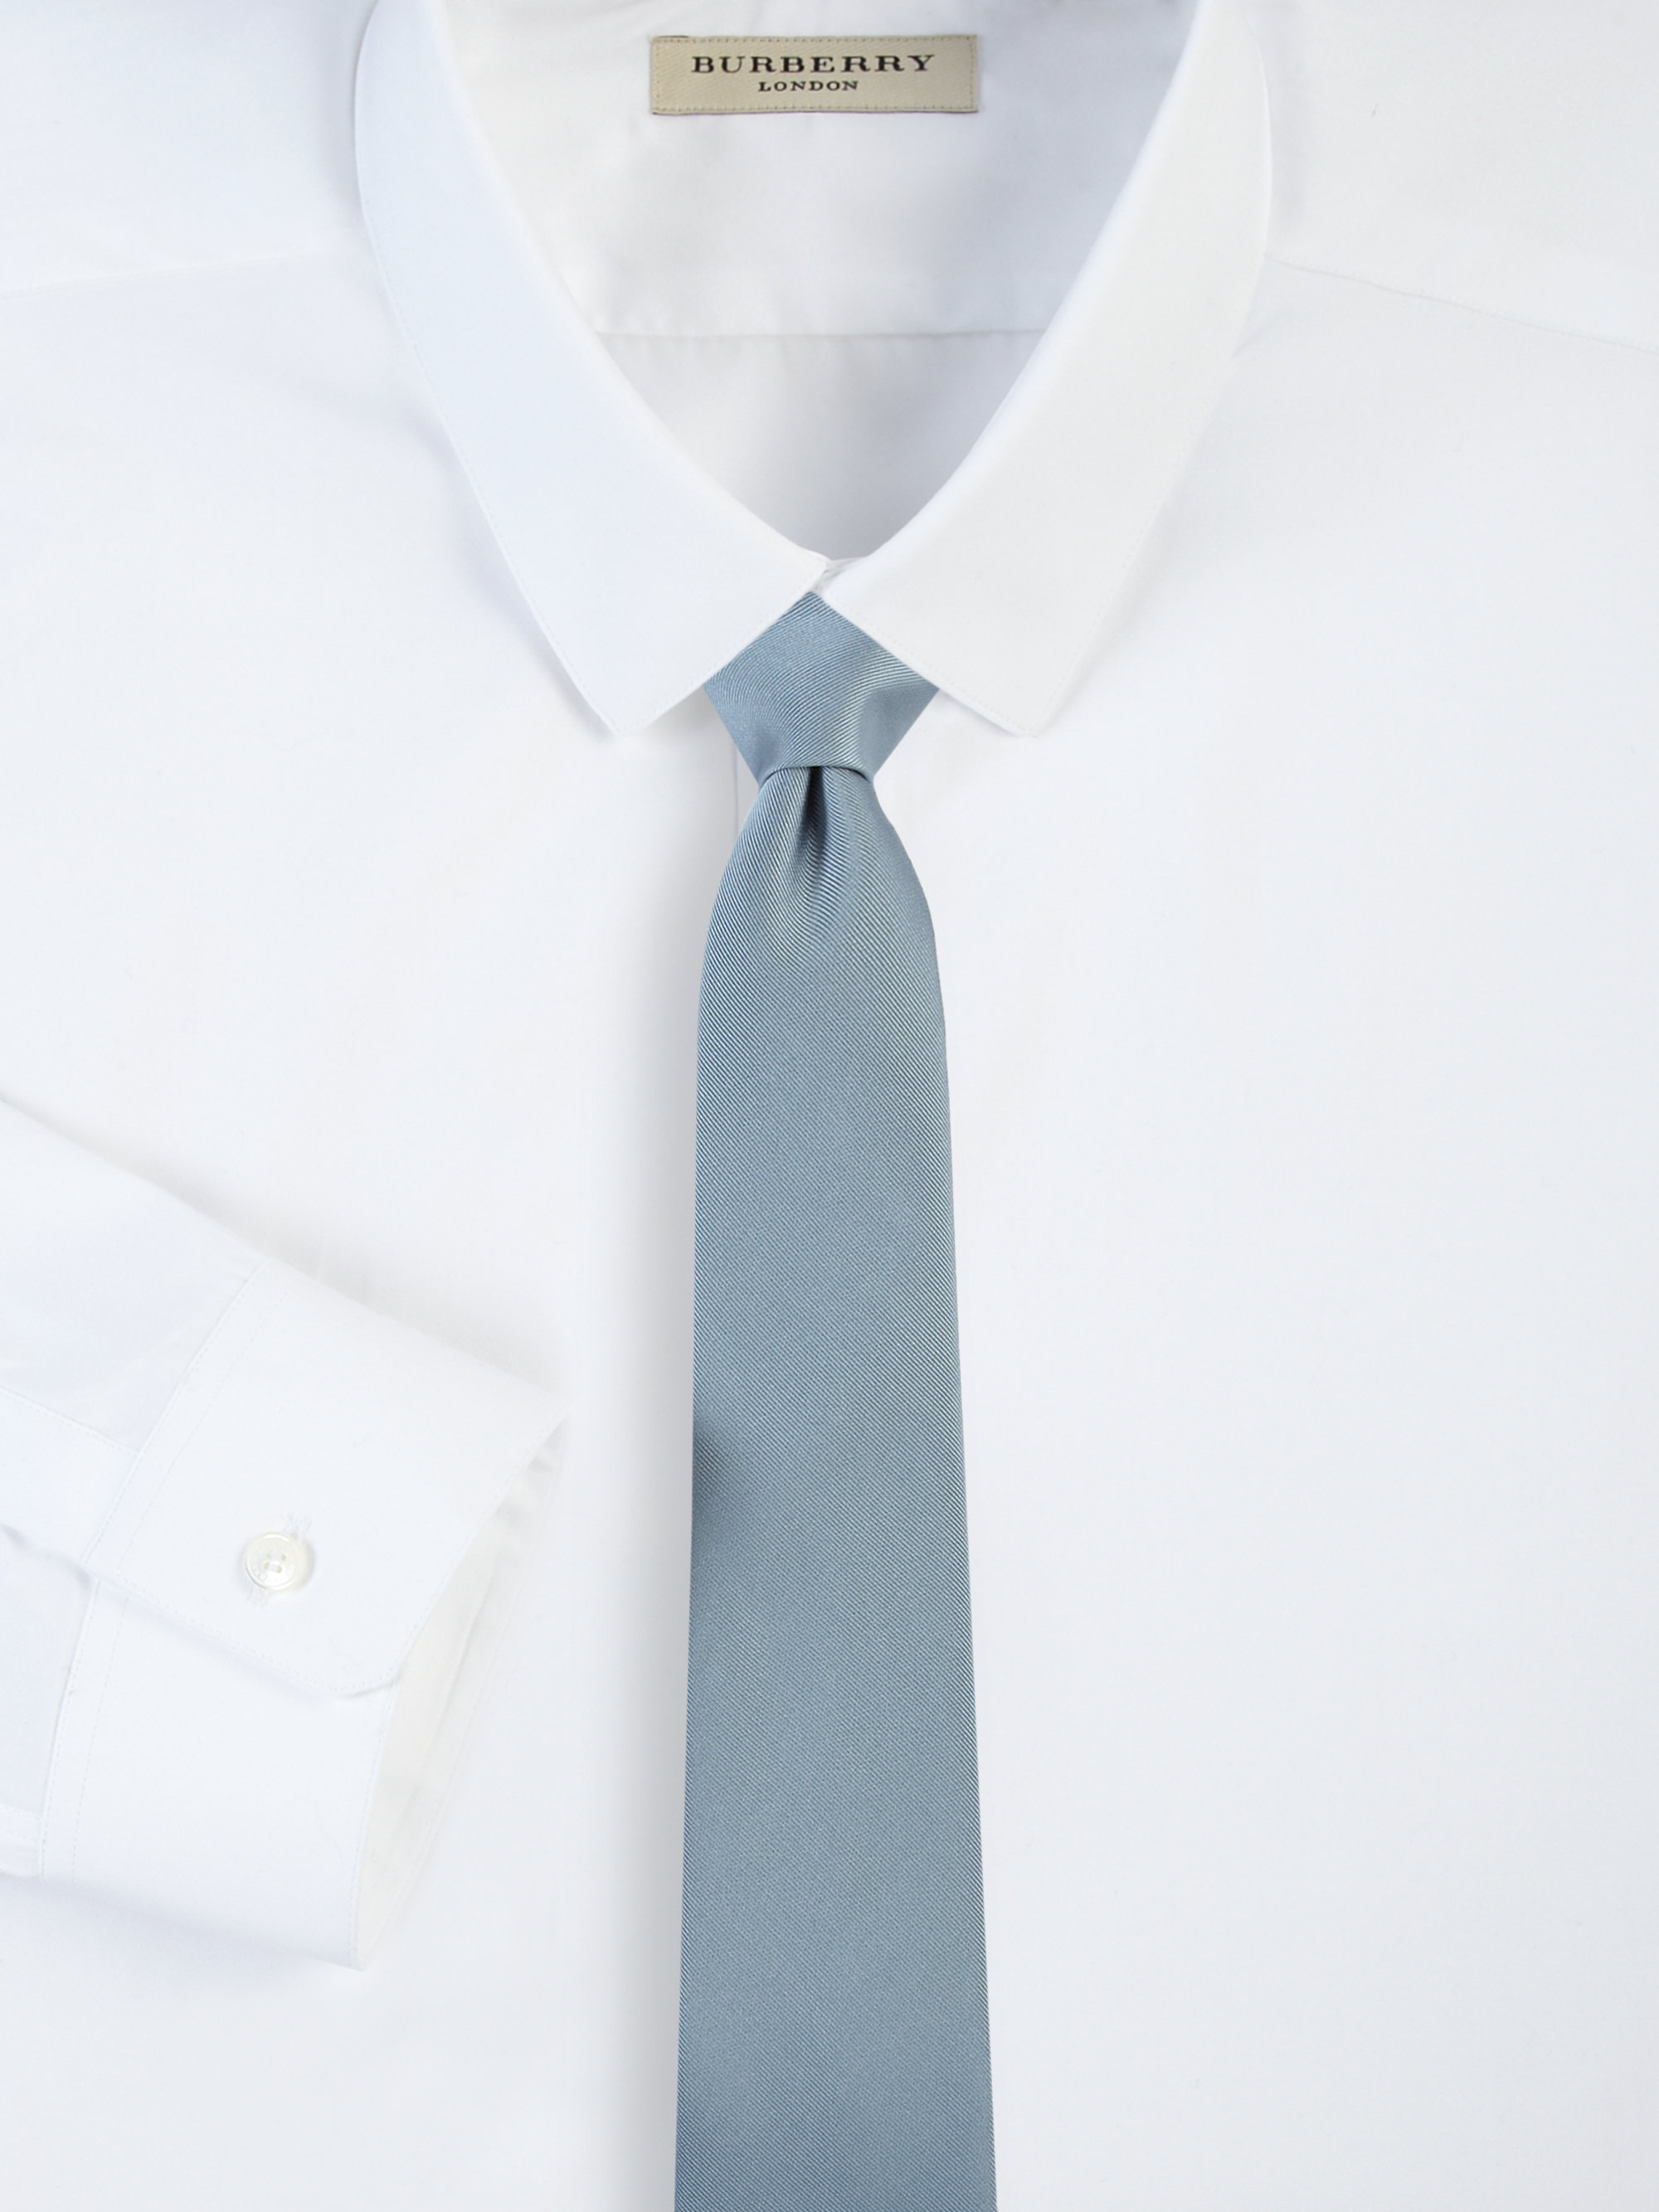 Burberry Rohan Silk Tie in Blue for Men - Lyst